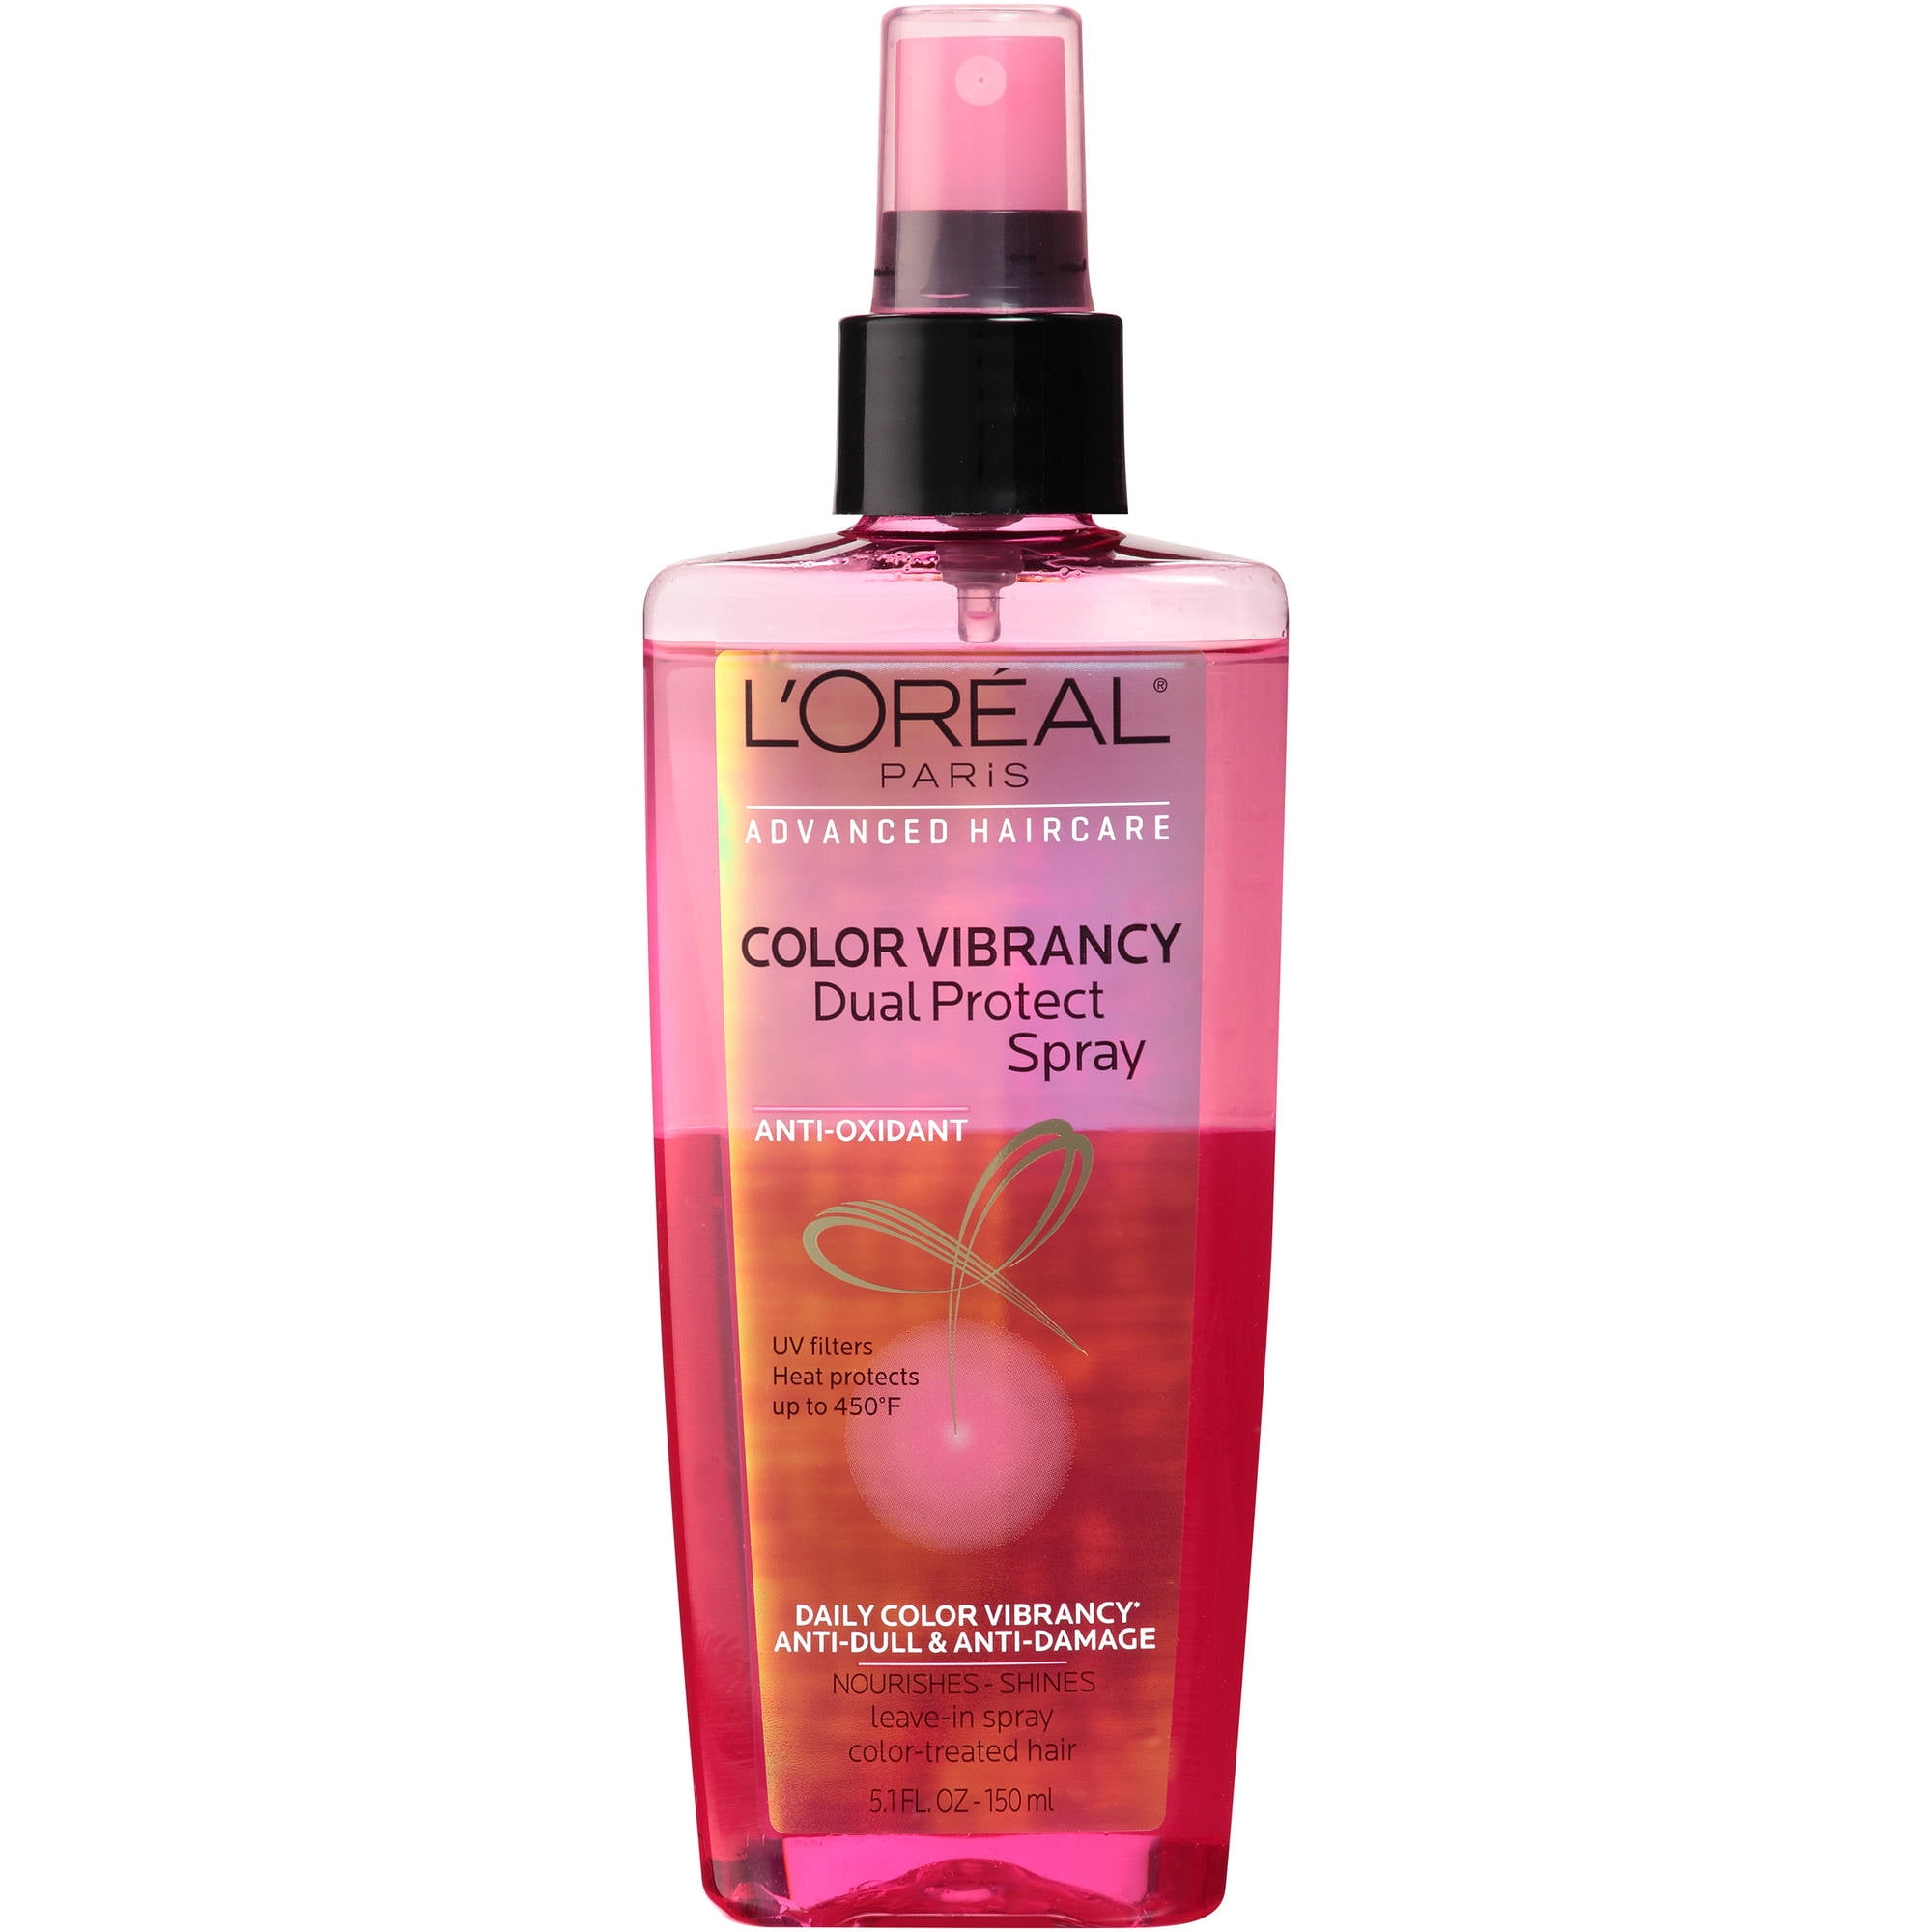 LOreal Paris Anti Oxidant Color Vibrancy Dual Protect Spray 51